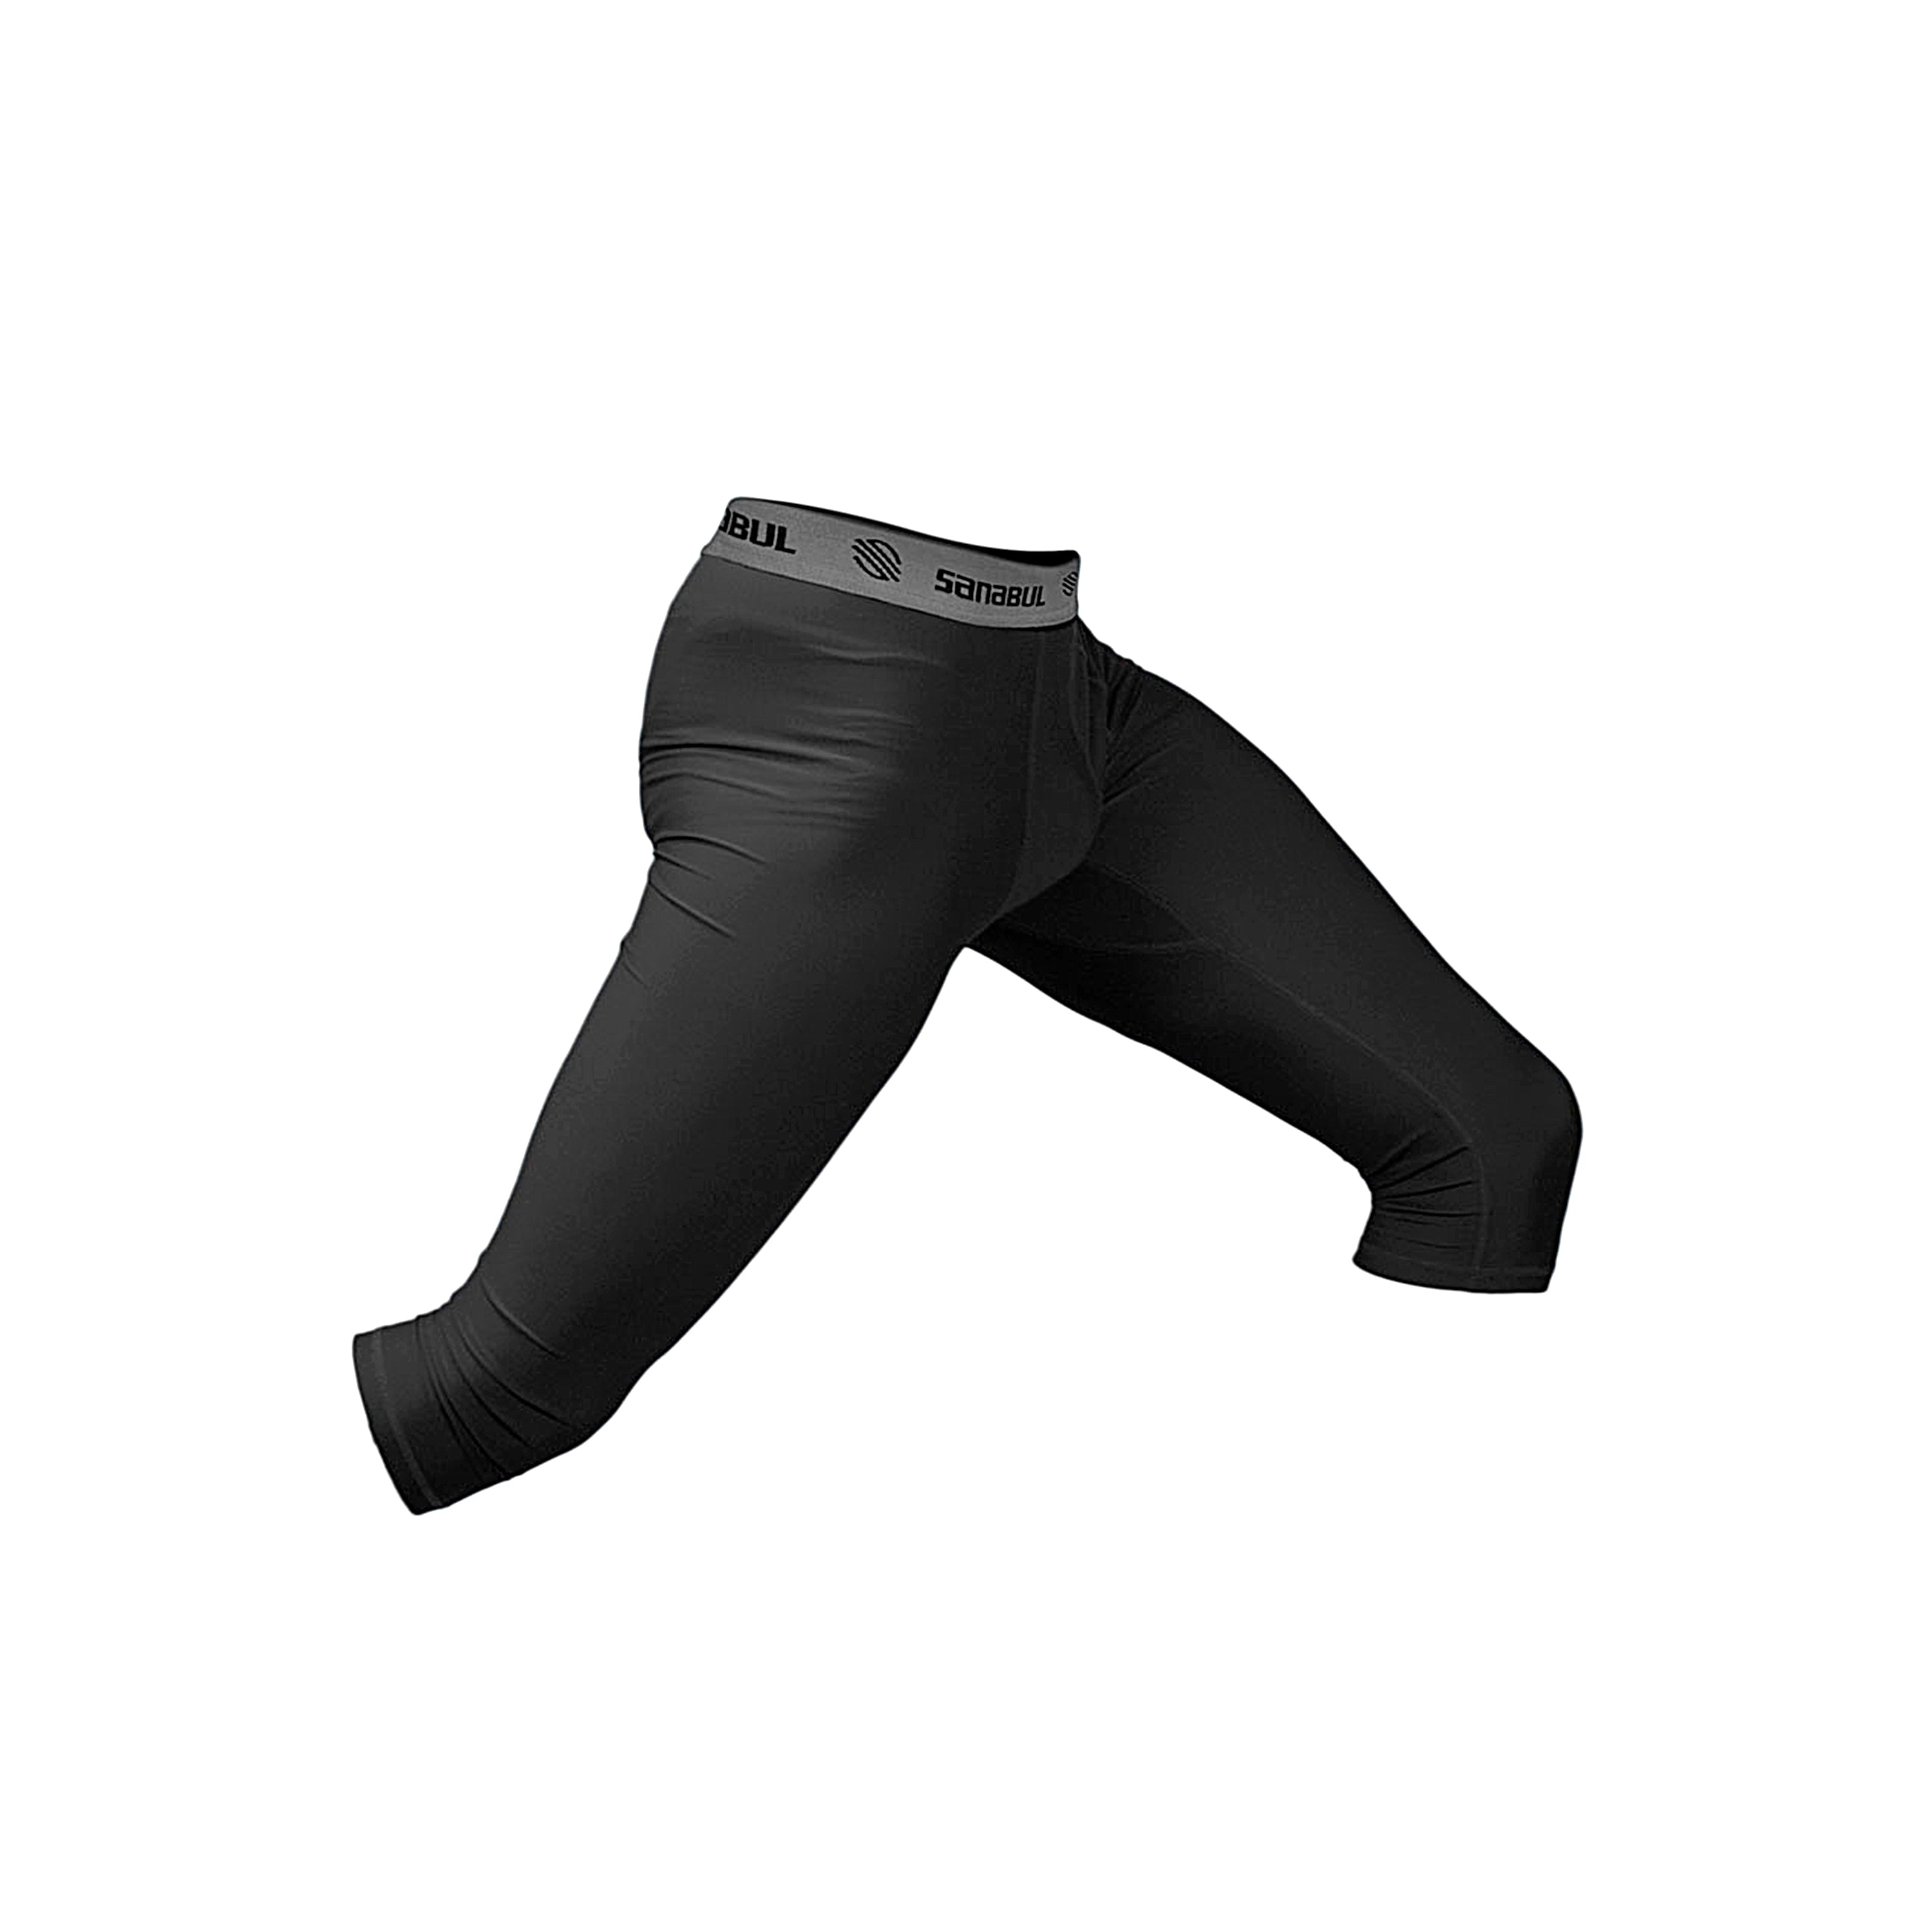 TSLA Men's 3/4 Compression Pants, Running Workout Tights, Cool Dry Capri  Athletic Leggings, Yoga Gym Base Layer